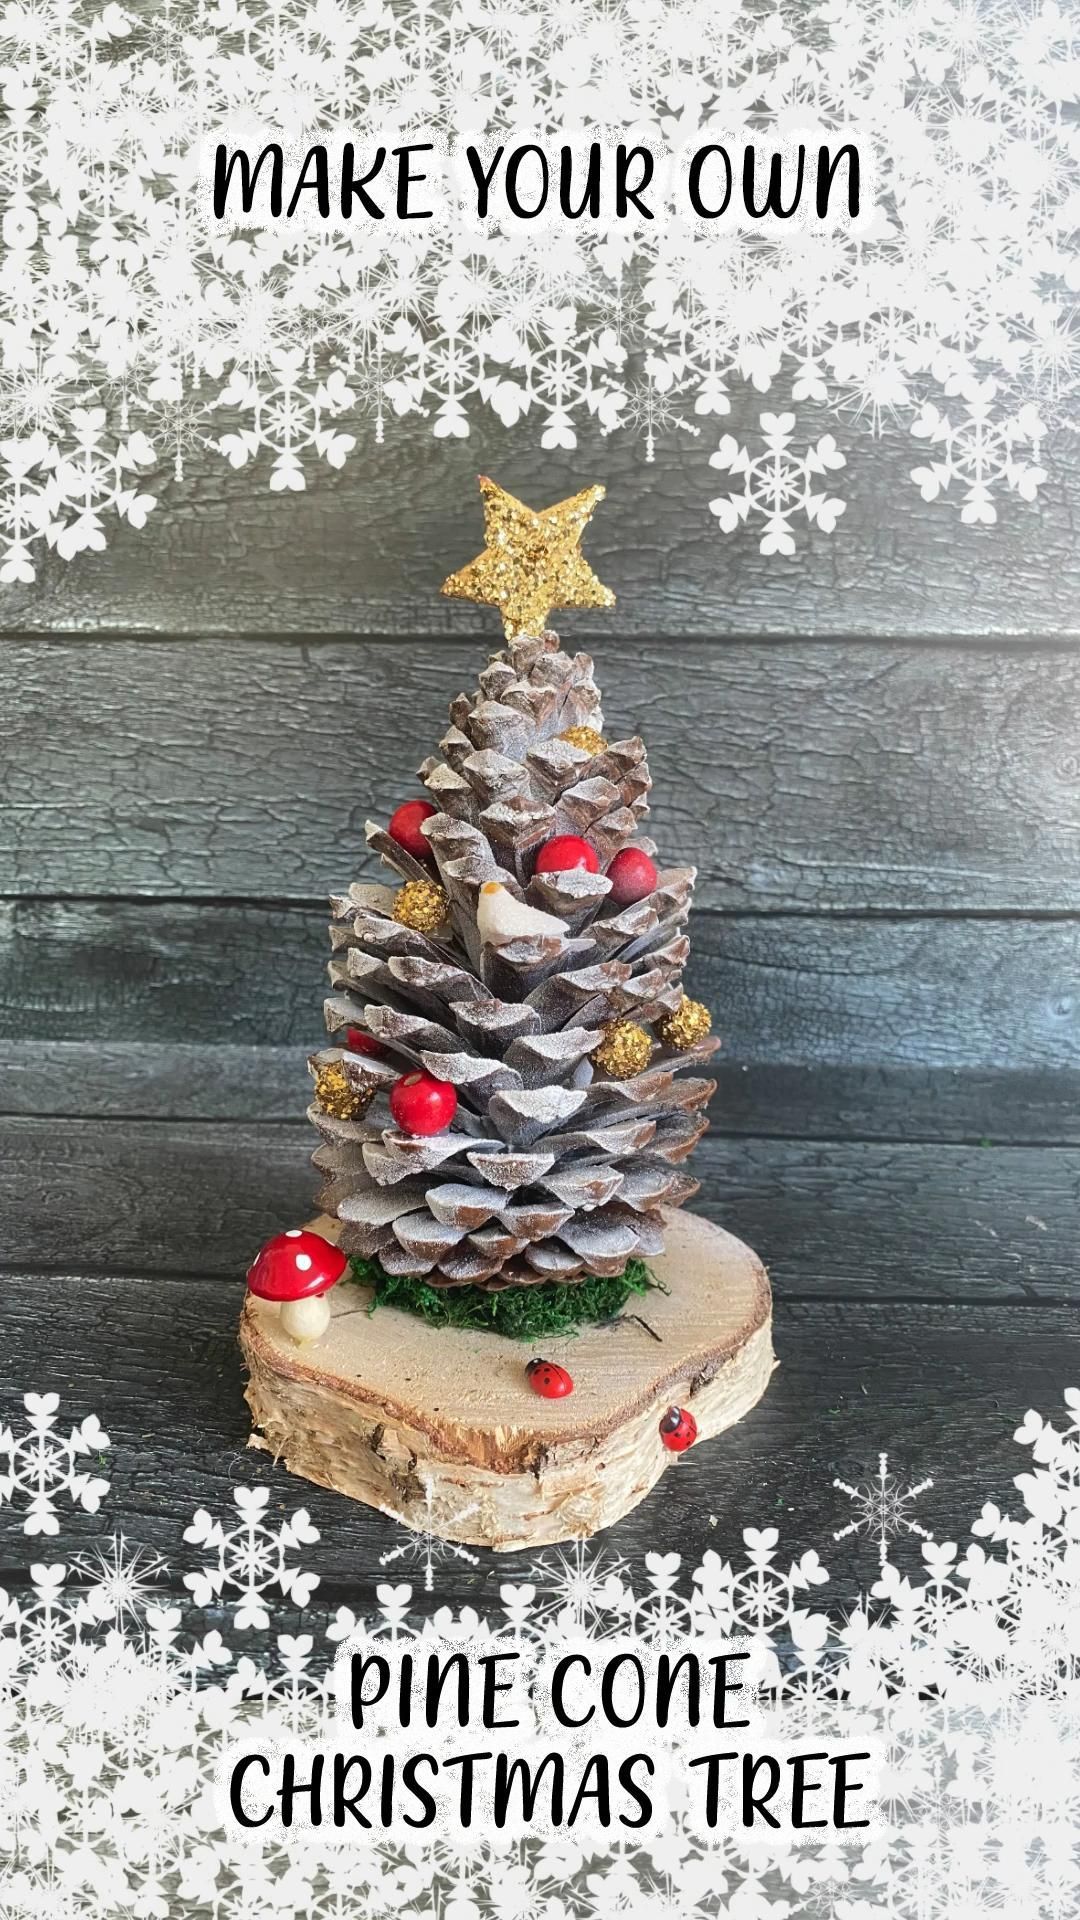 Giant Pine Cone Christmas Tree -